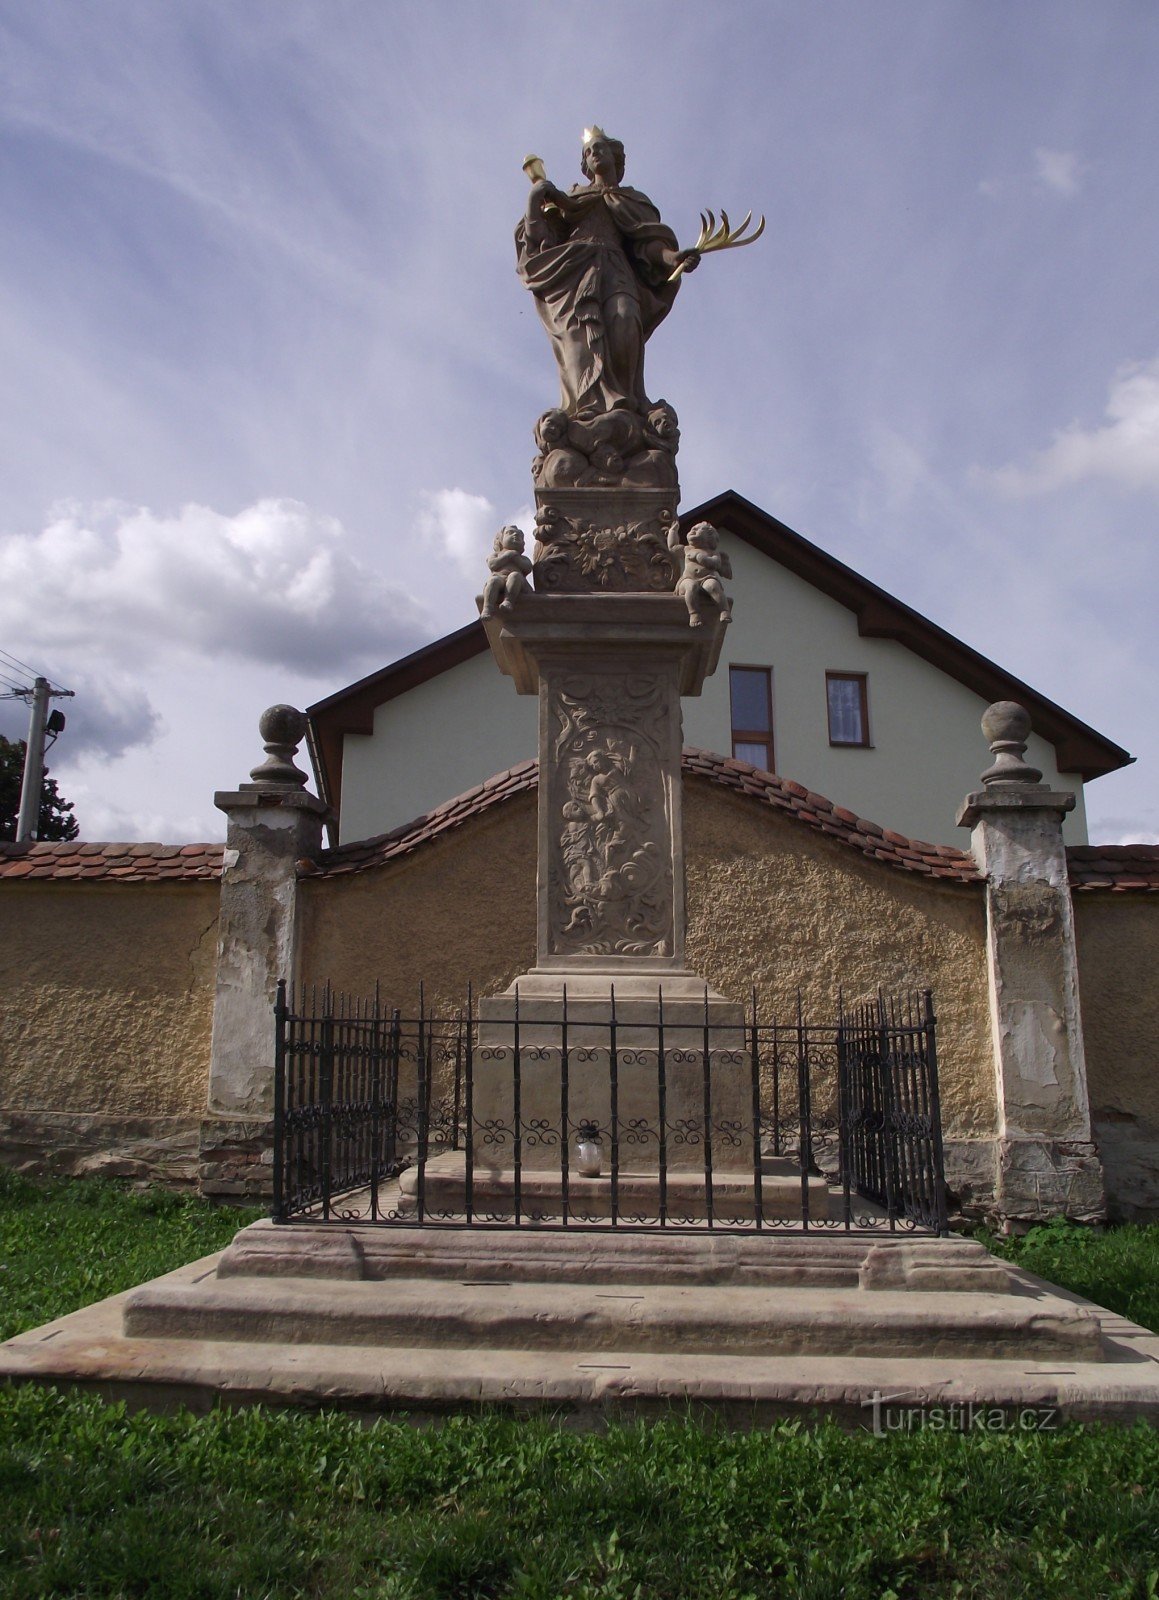 Cholina - standbeeld van St. Barbara